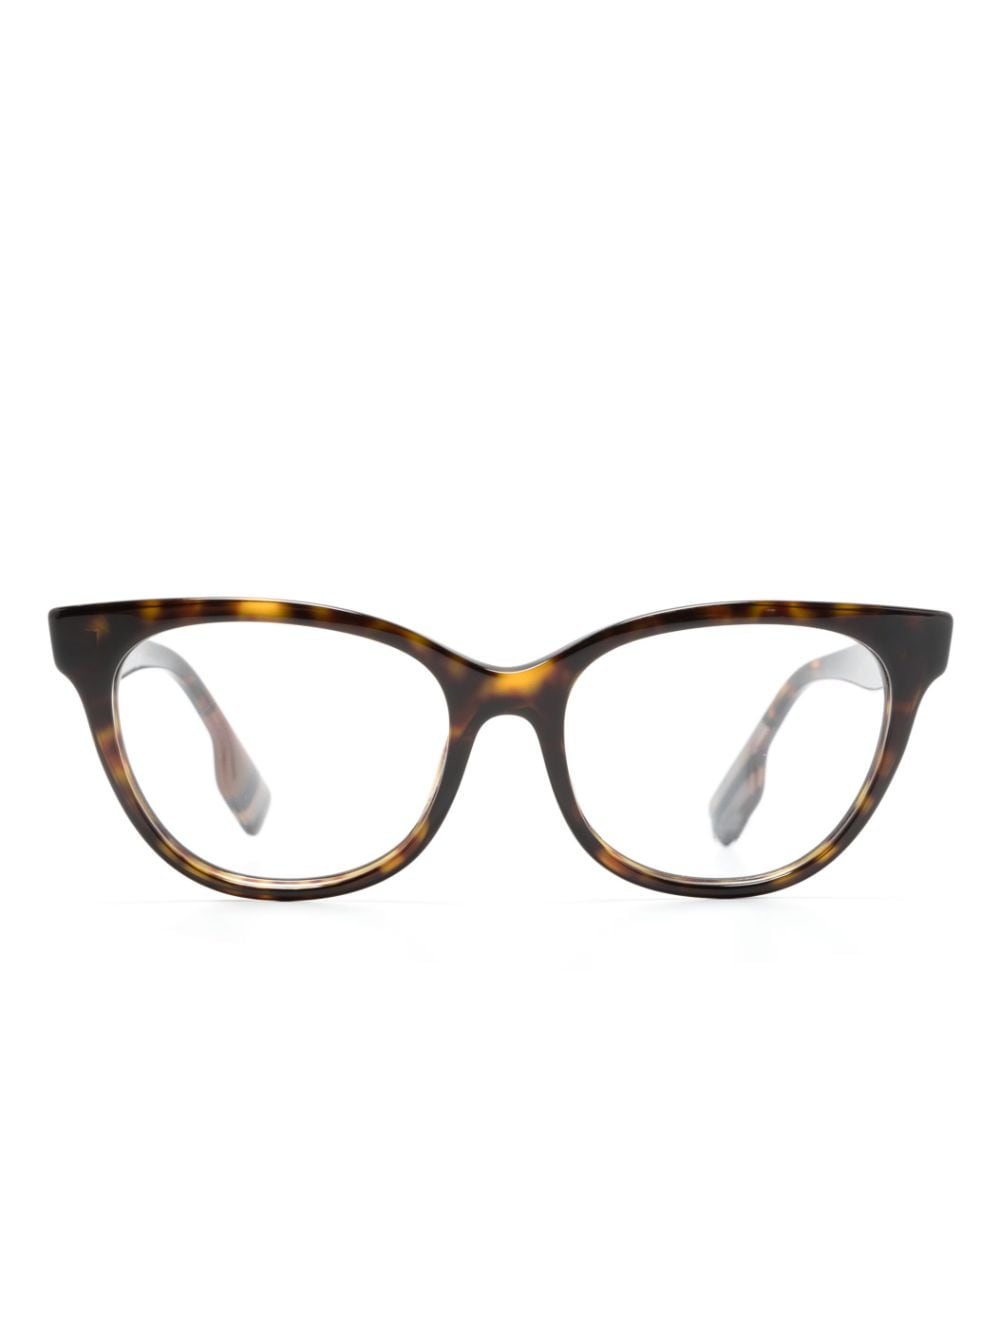 Burberry Eyewear tortoiseshell cat-eye glasses - Green von Burberry Eyewear